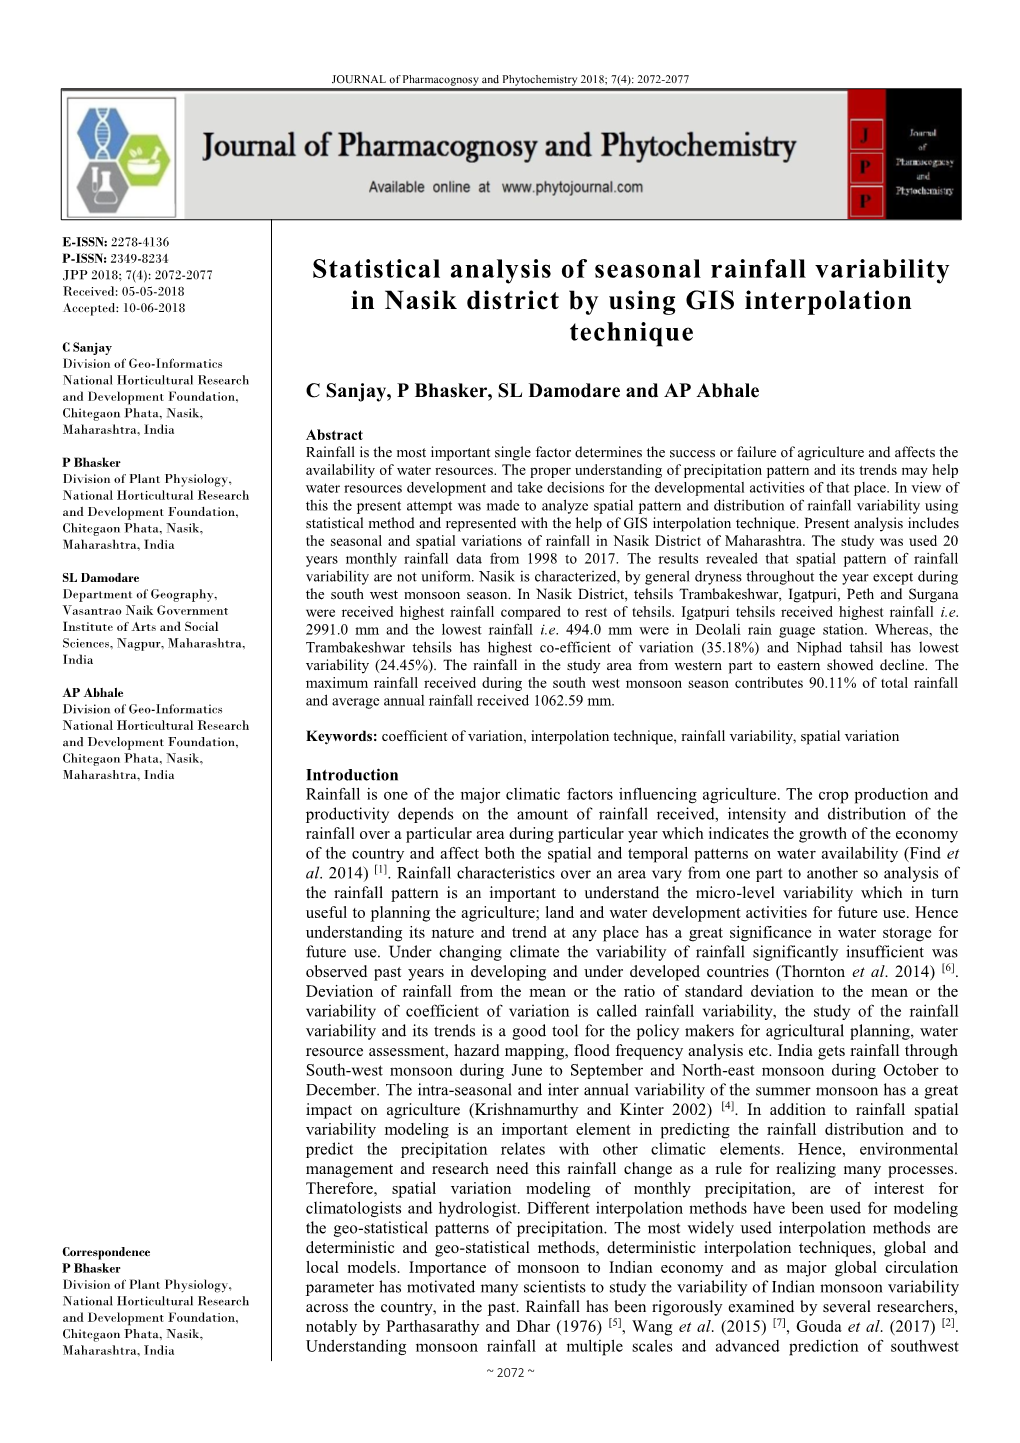 Statistical Analysis of Seasonal Rainfall Variability in Nasik District by Using